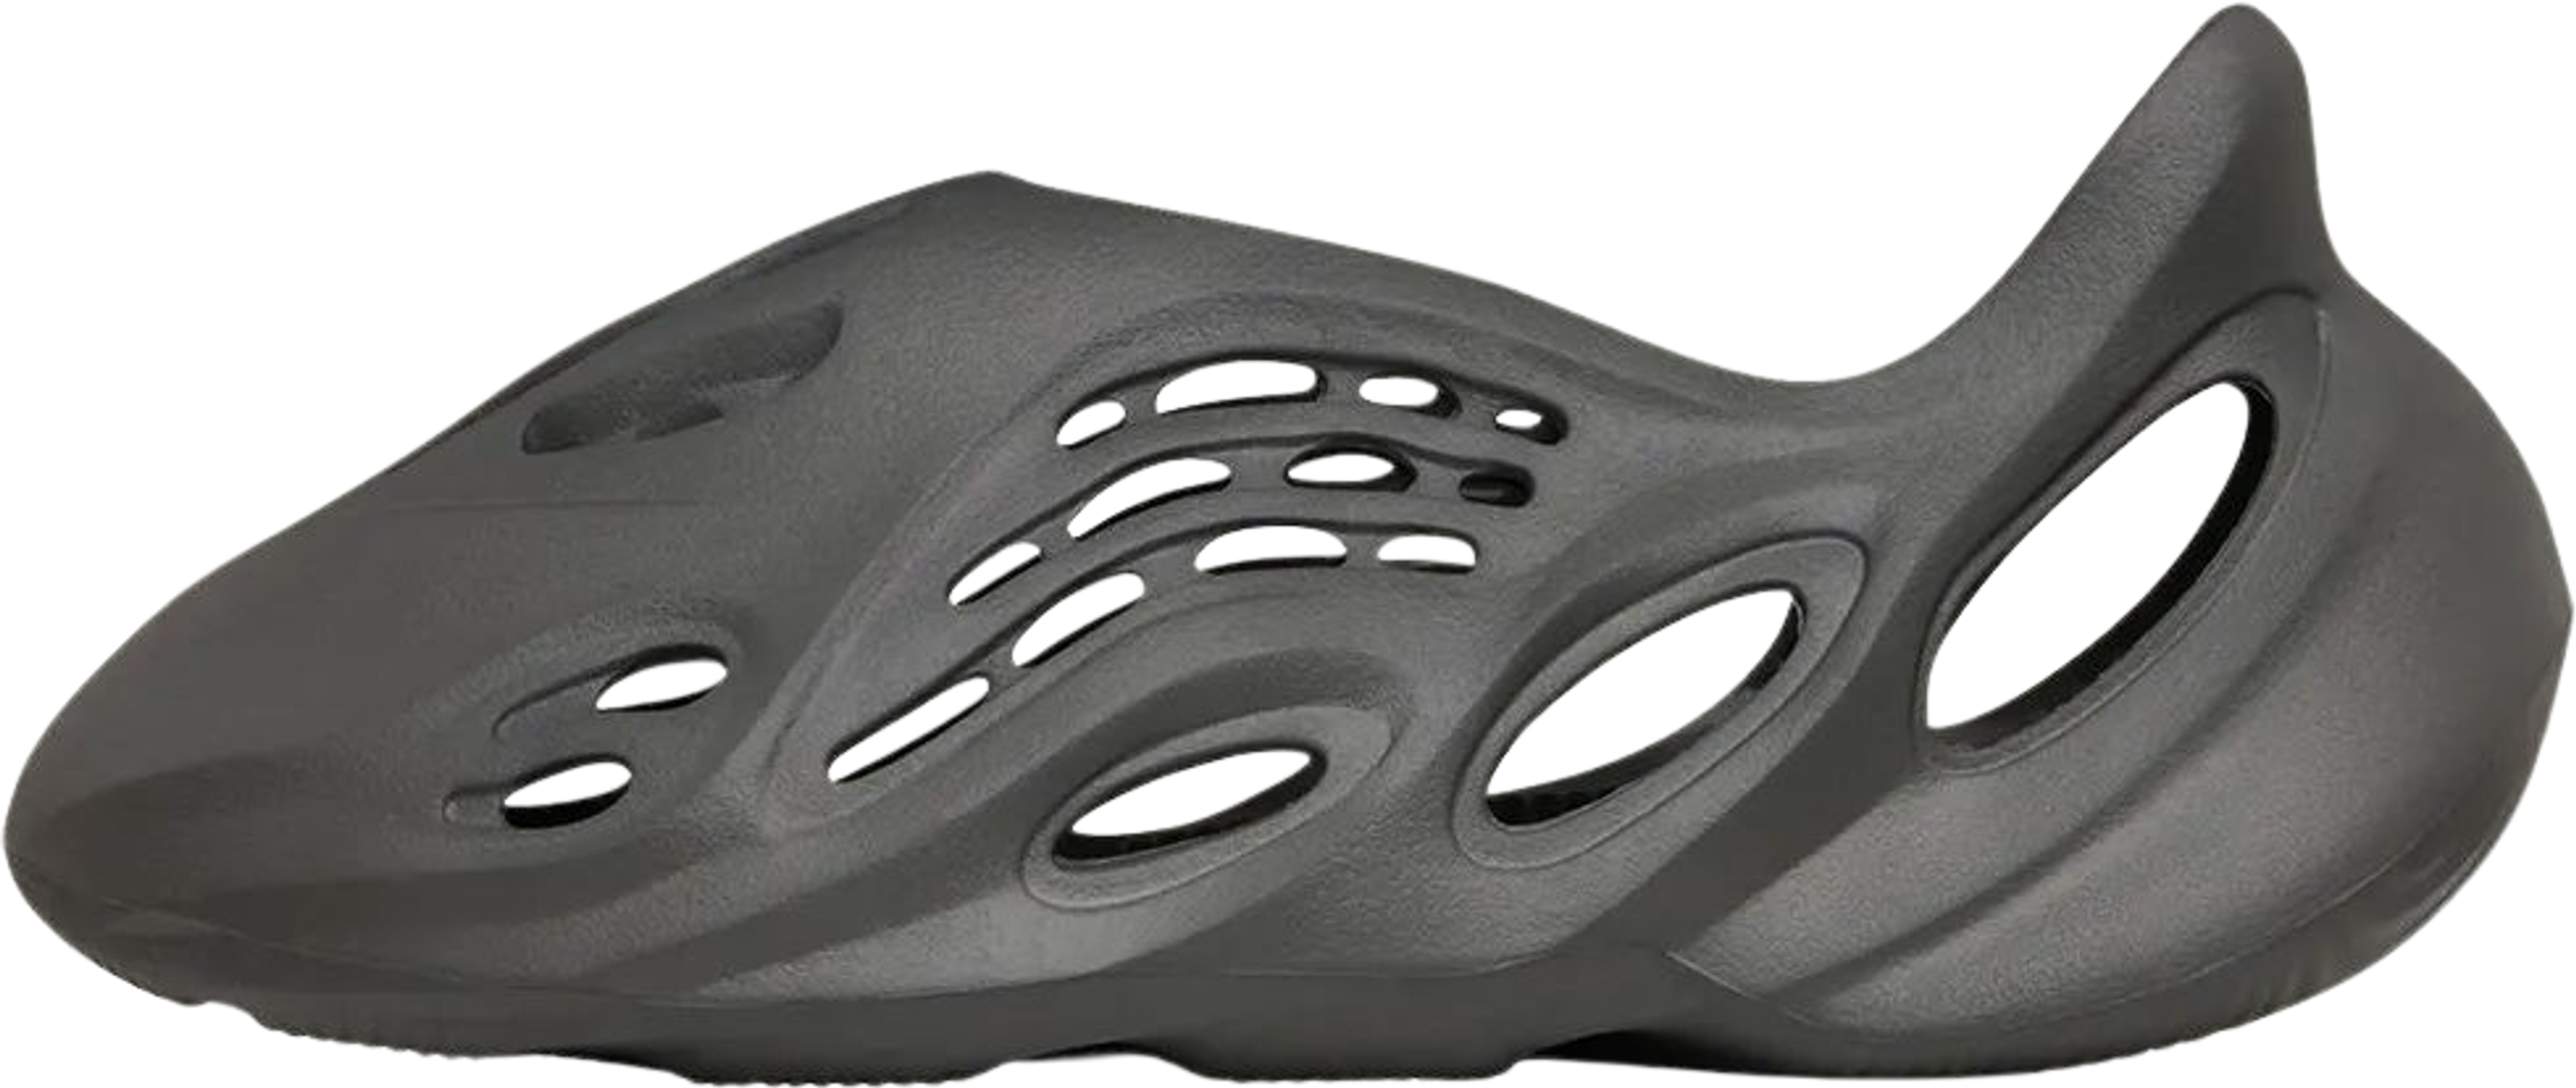 adidas Yeezy Foam RNR Carbon | Release Information